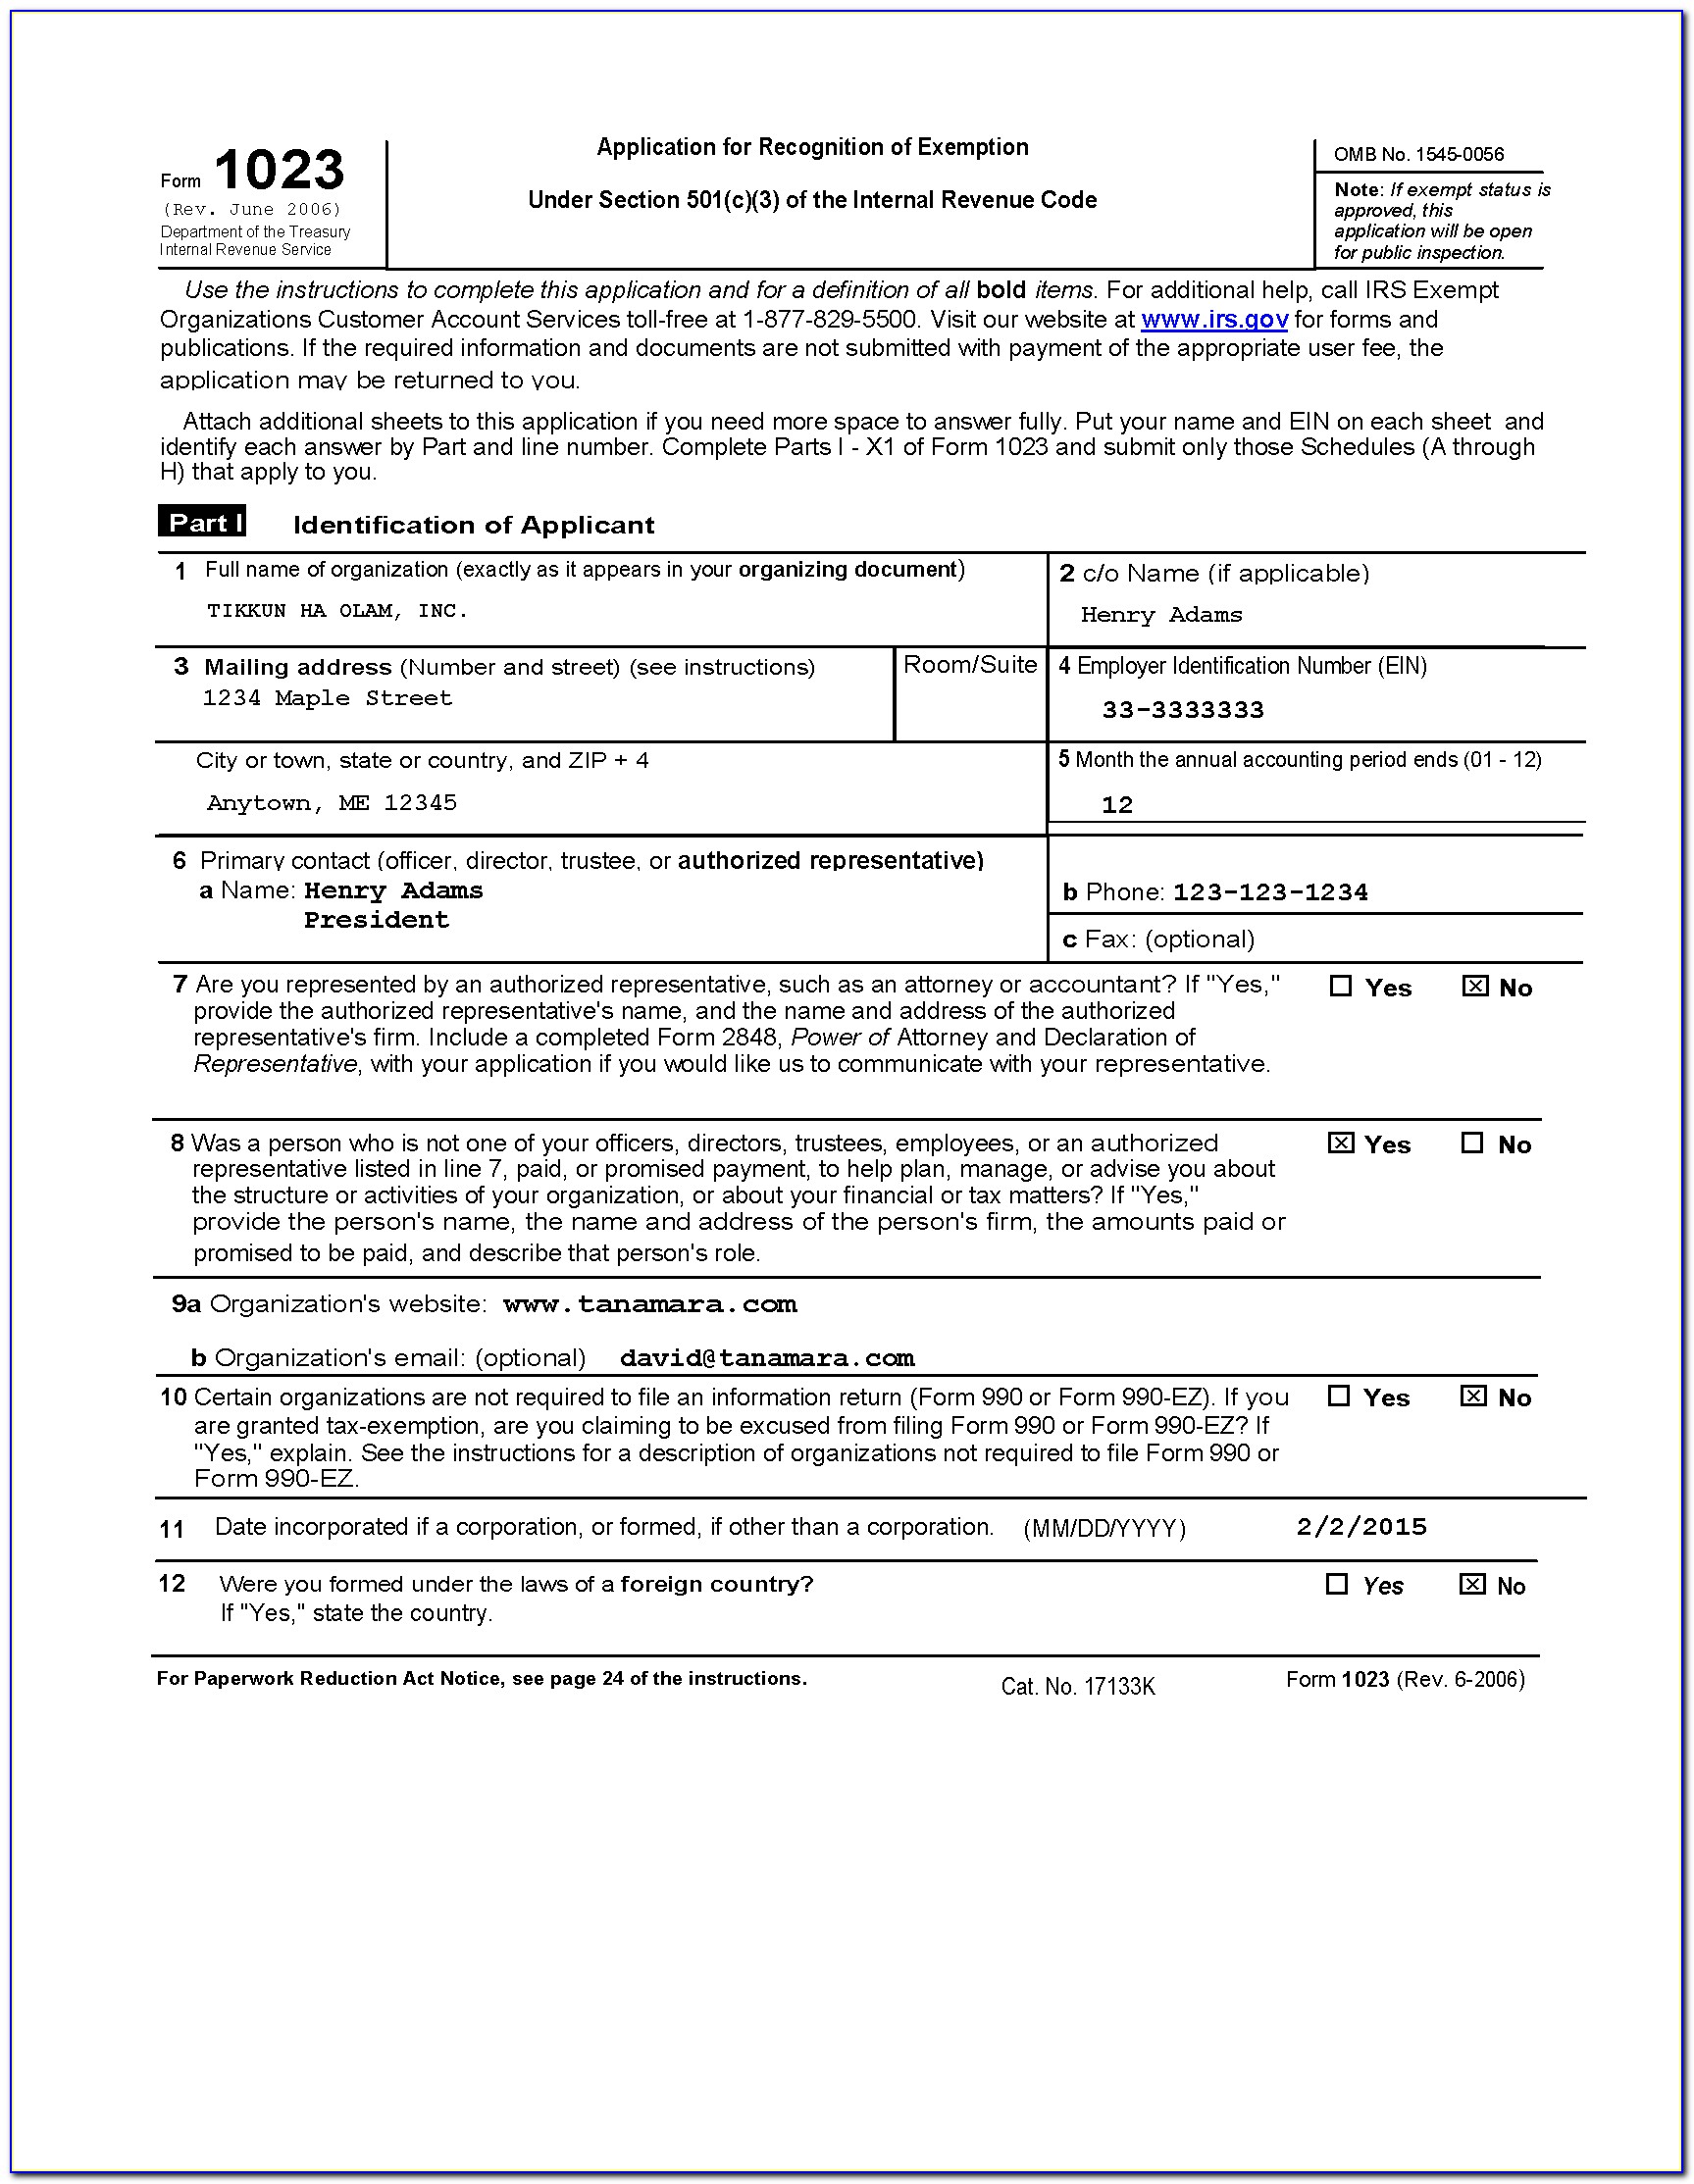 Form 1023 Checklist Pdf